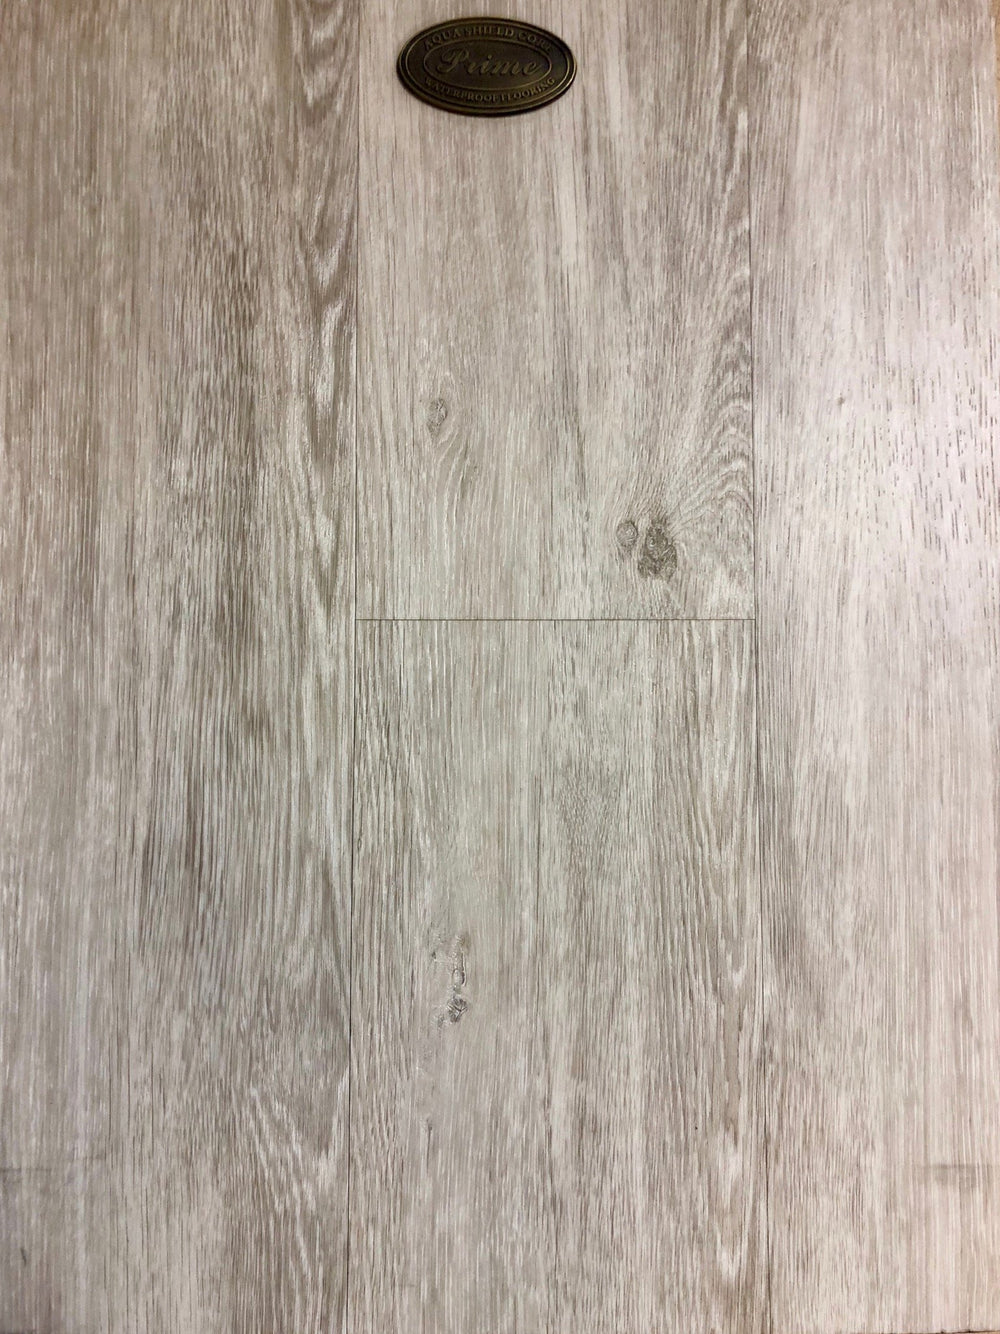 Pearly White Waterproof Flooring by Prime